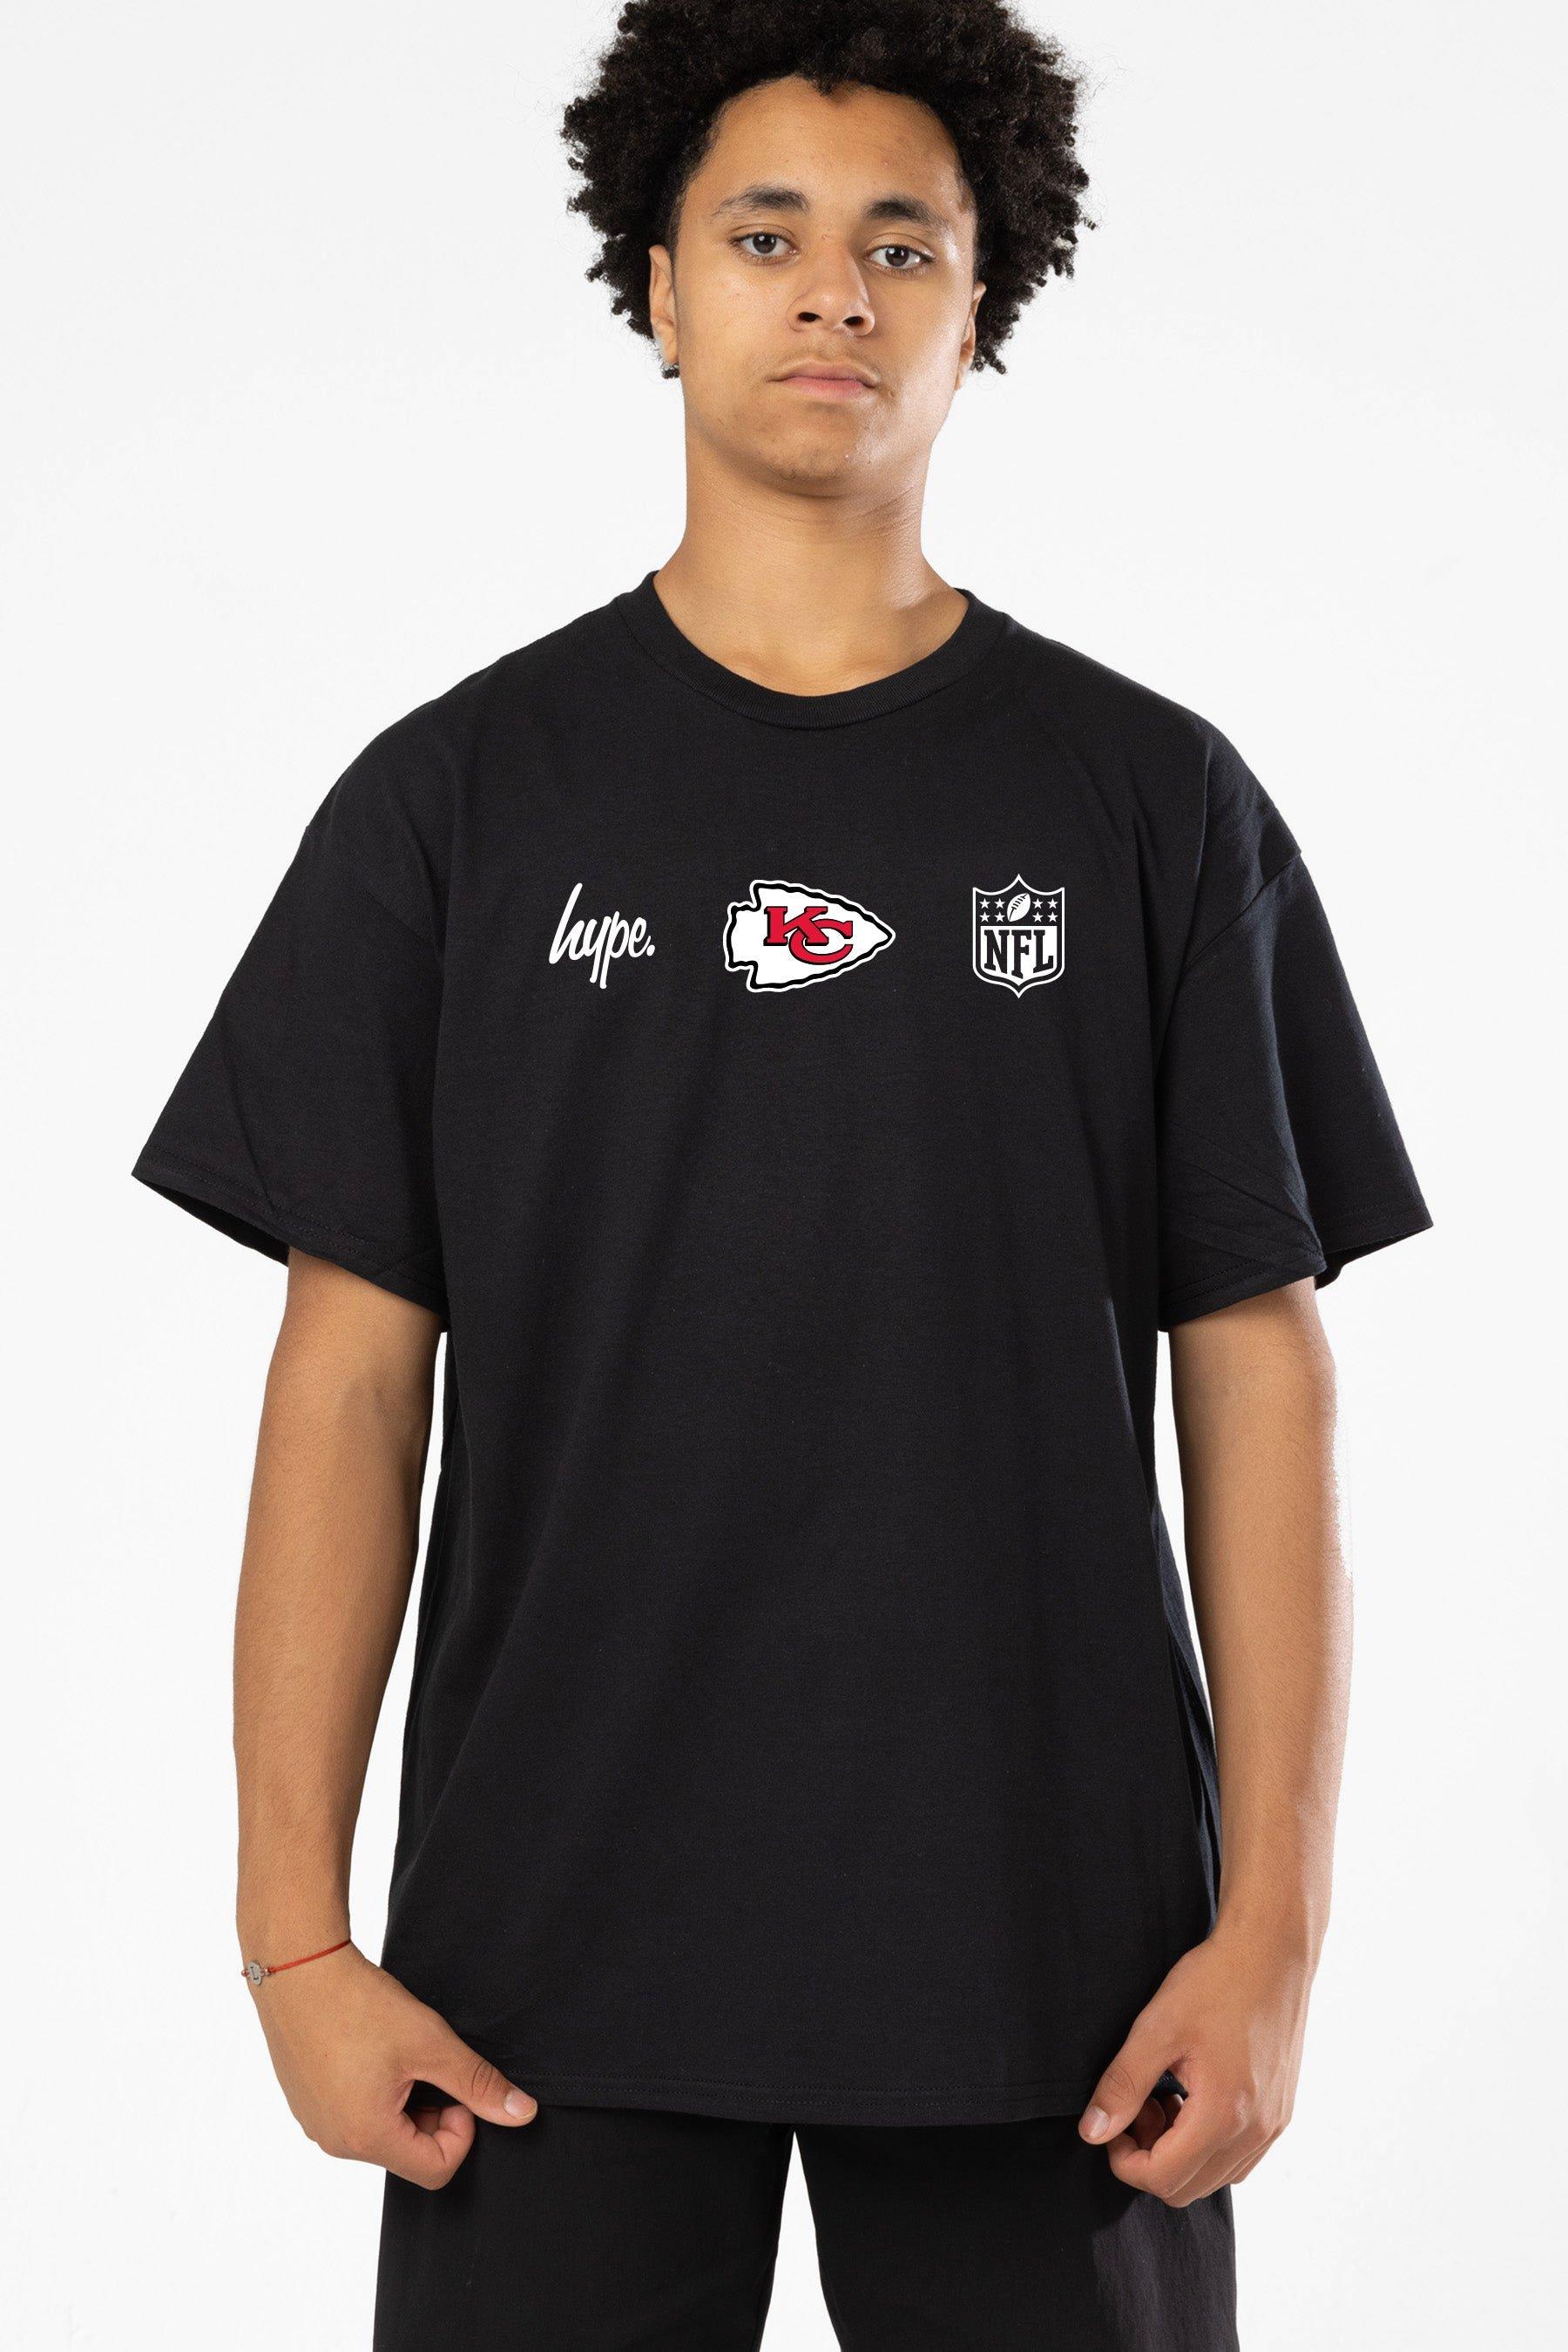 NFL X Kansas City Chiefs T-Shirt